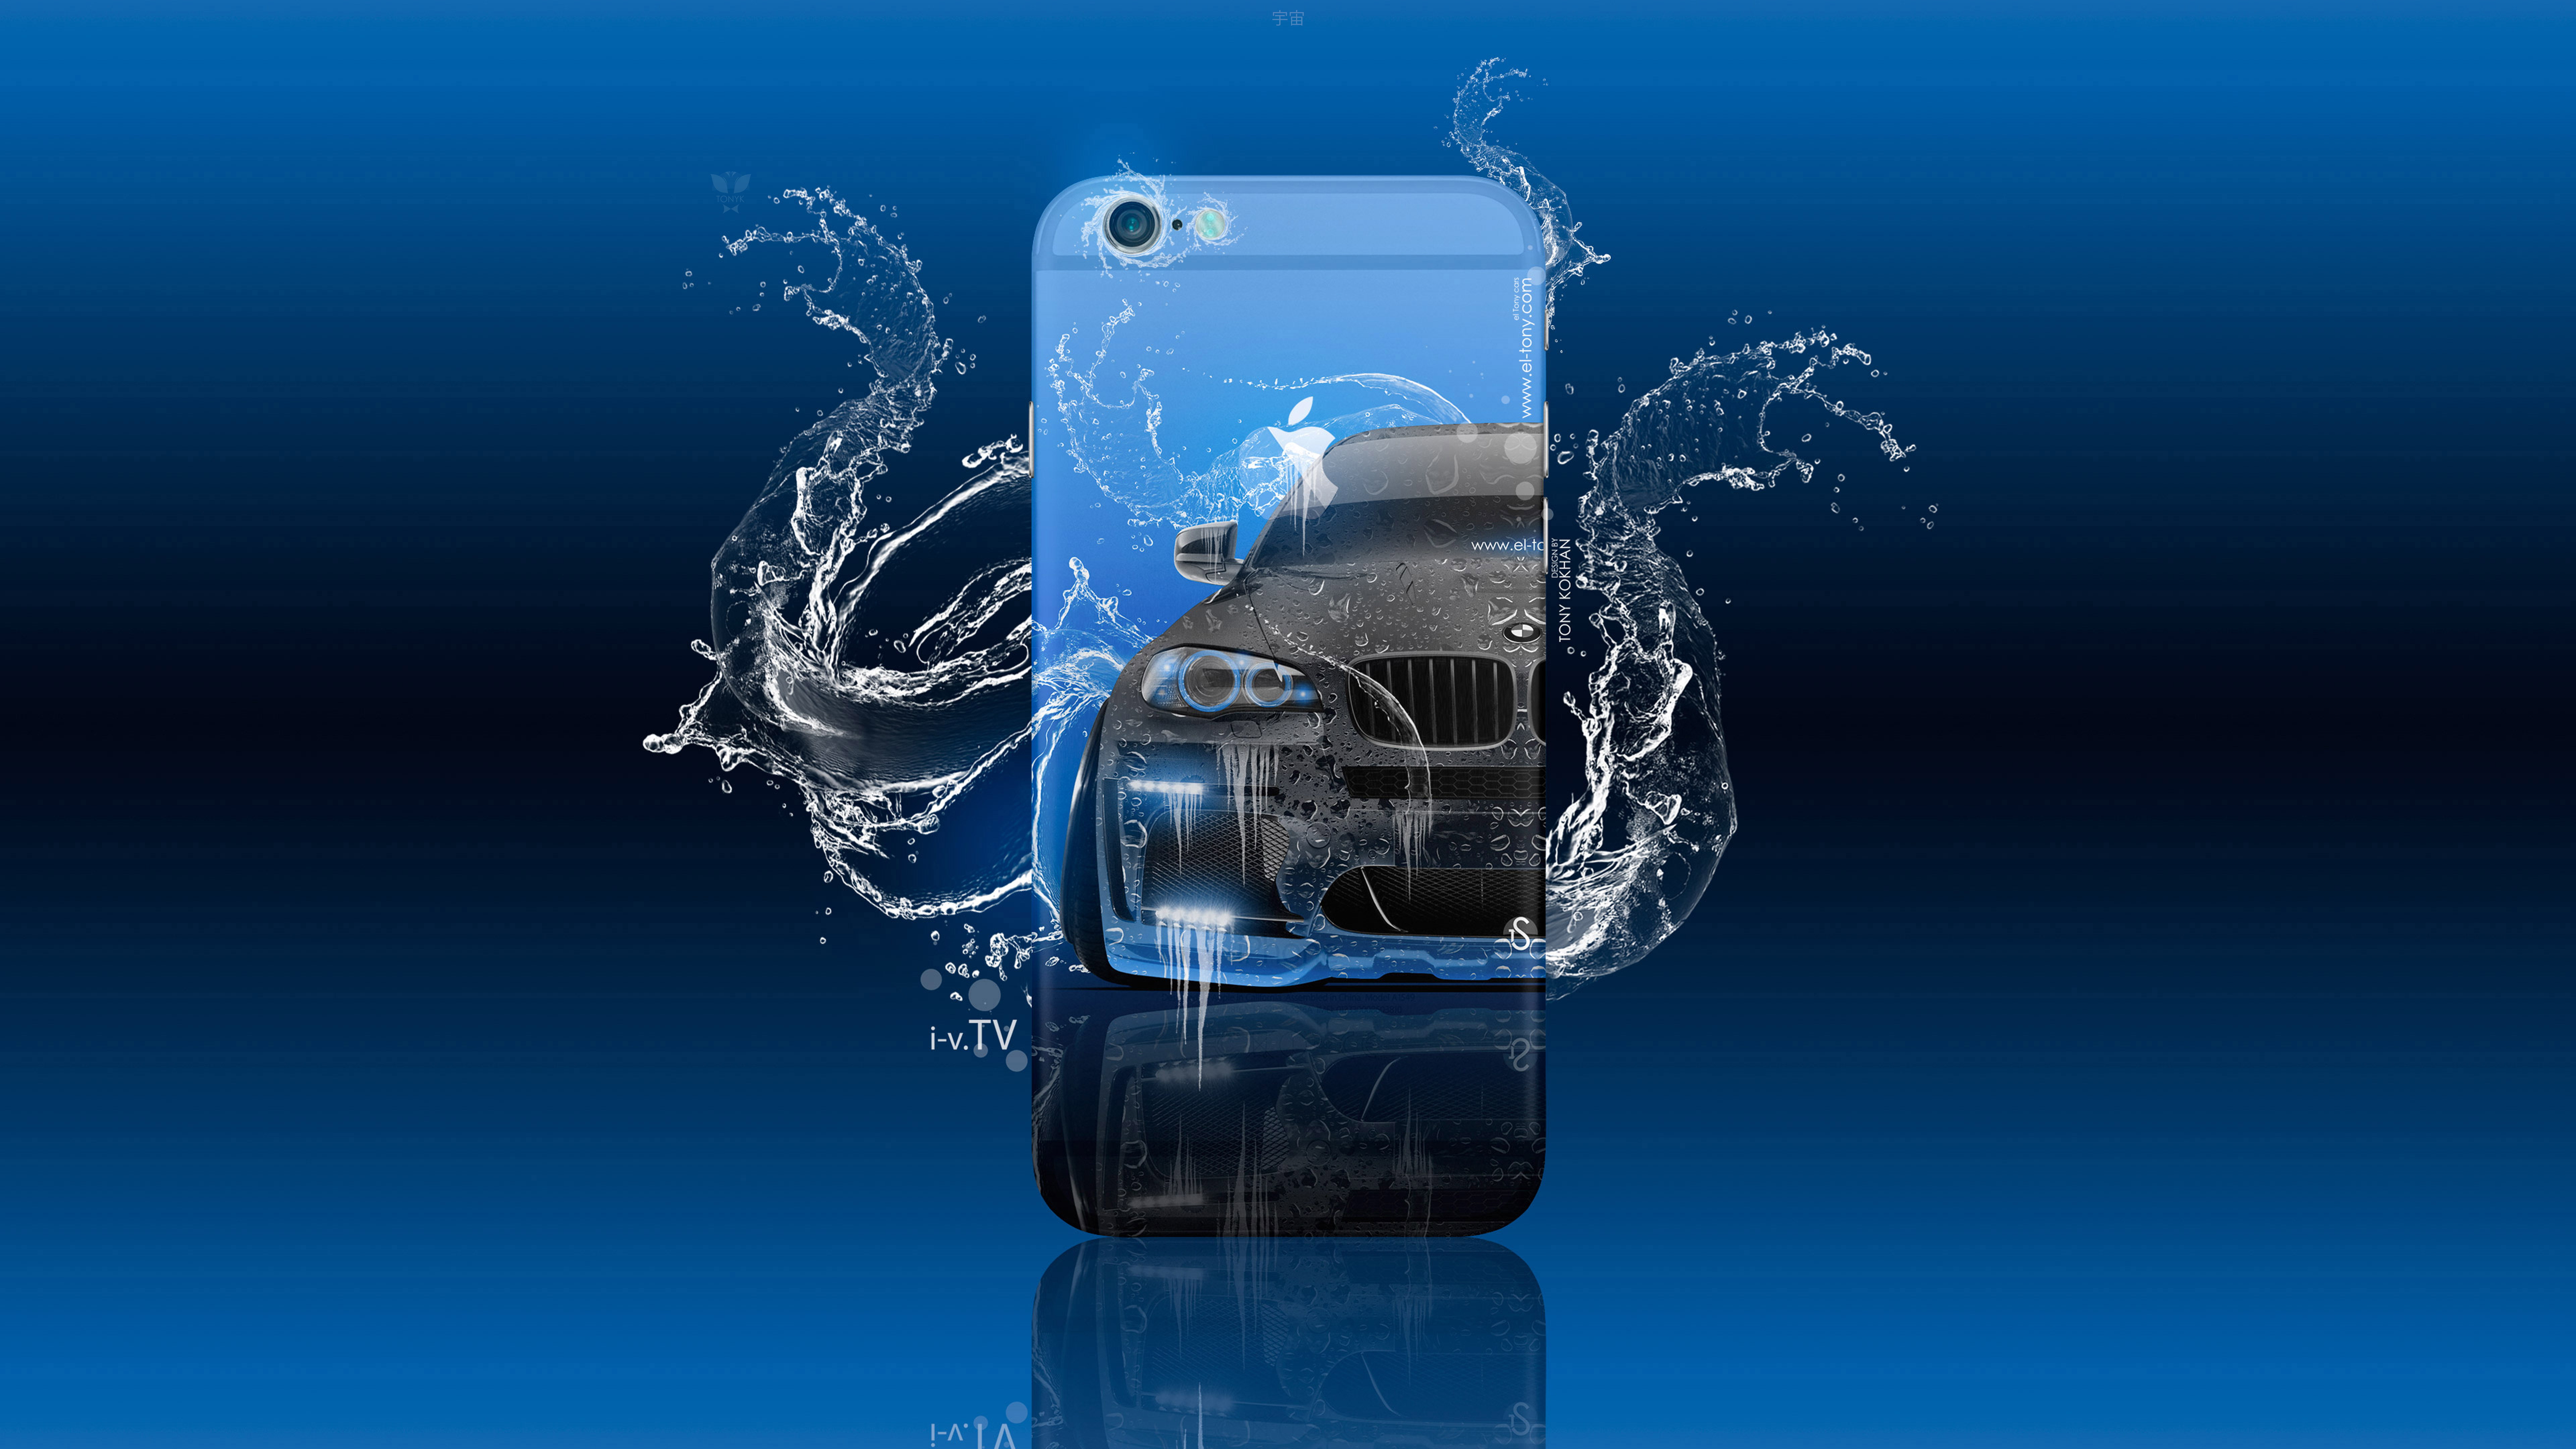 Apple-iPhone-6-Plus-Gadget-AppleTony-Back-Logo-BMW-X6-Tuning-Front-Super-Water-Splashes-Car